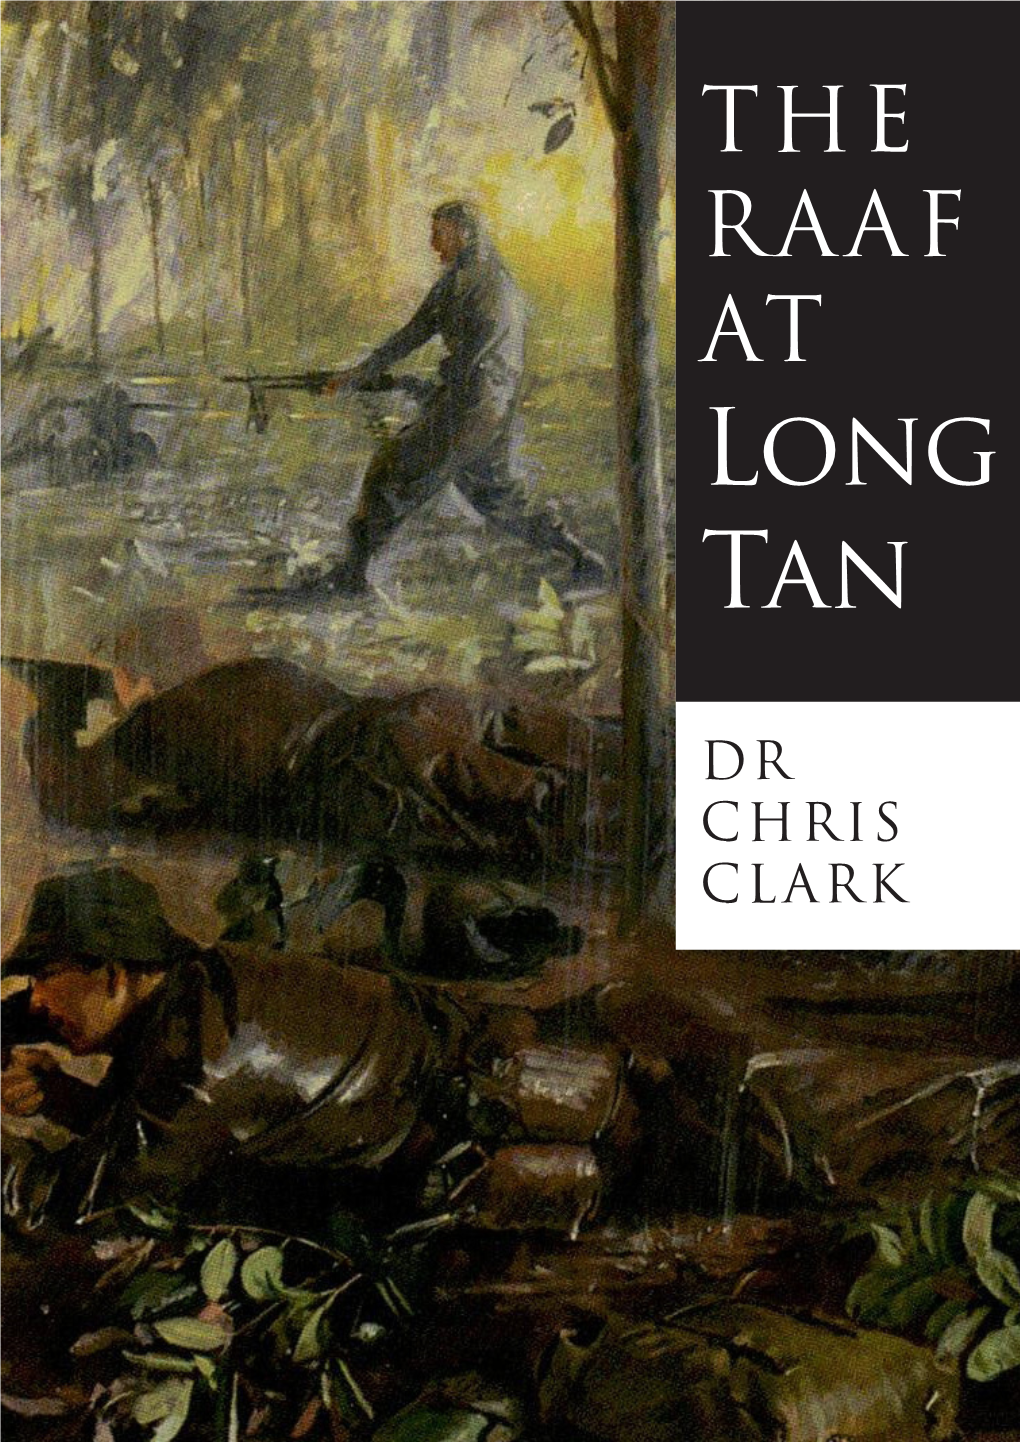 THE RAAF at Long Tan